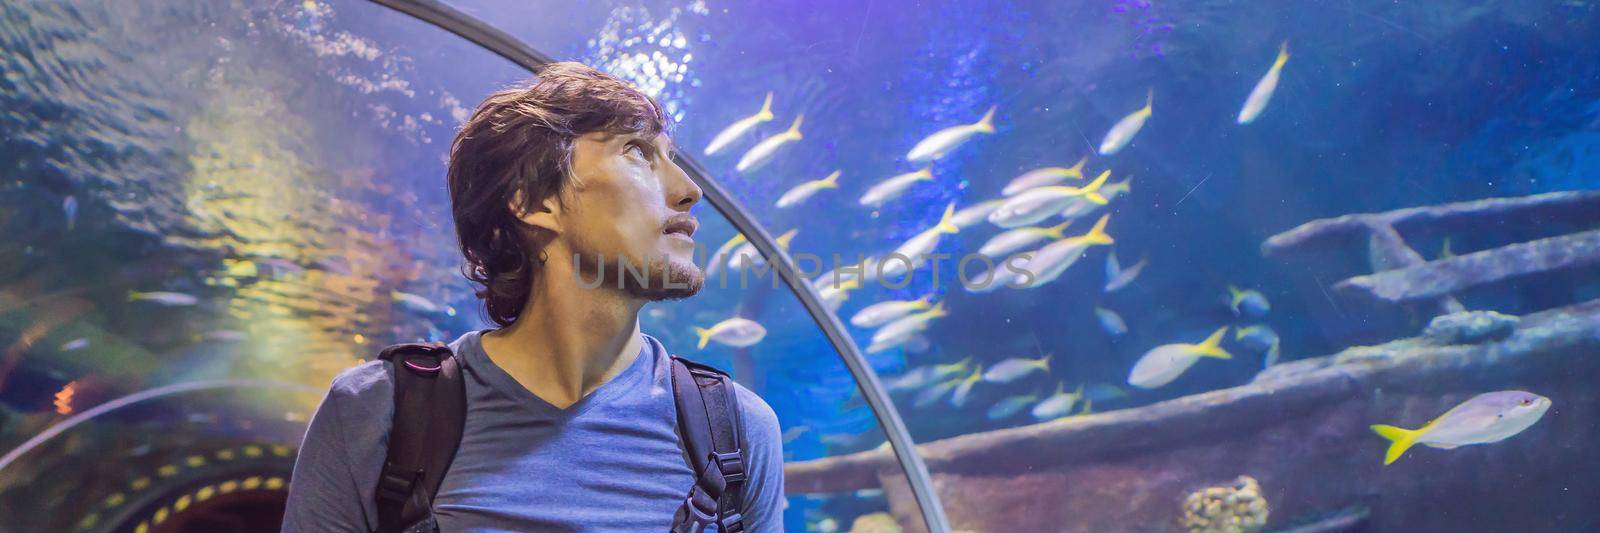 curious tourist watching with interest on shark in oceanarium tunnel BANNER, LONG FORMAT by galitskaya